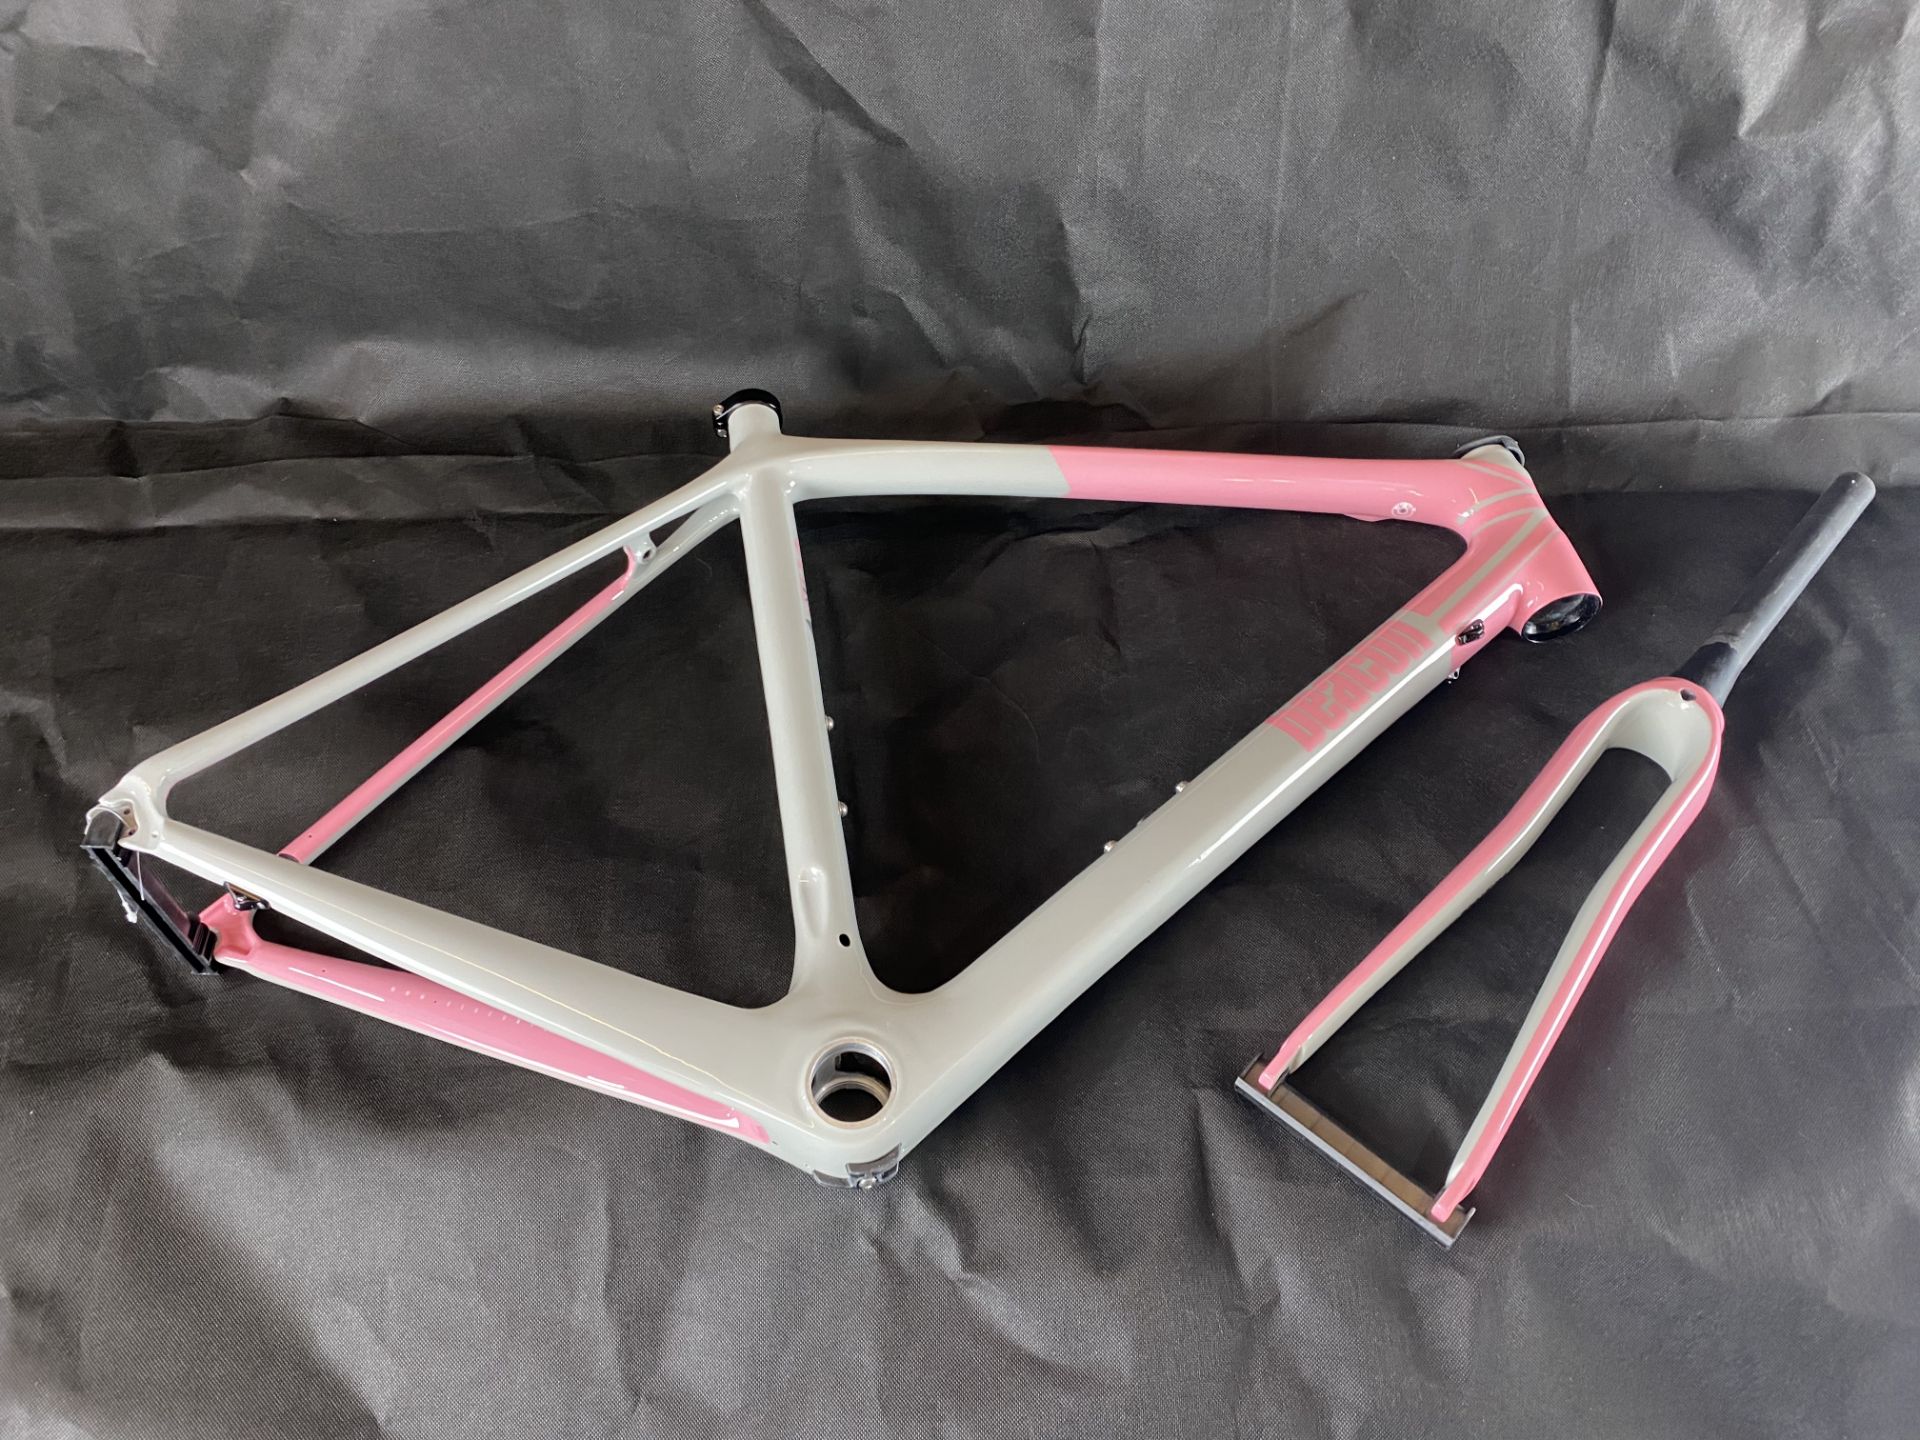 1 x Beacon Model BF-70, Size 560, Carbon Fibre Bike Frame in Grey & Pink.